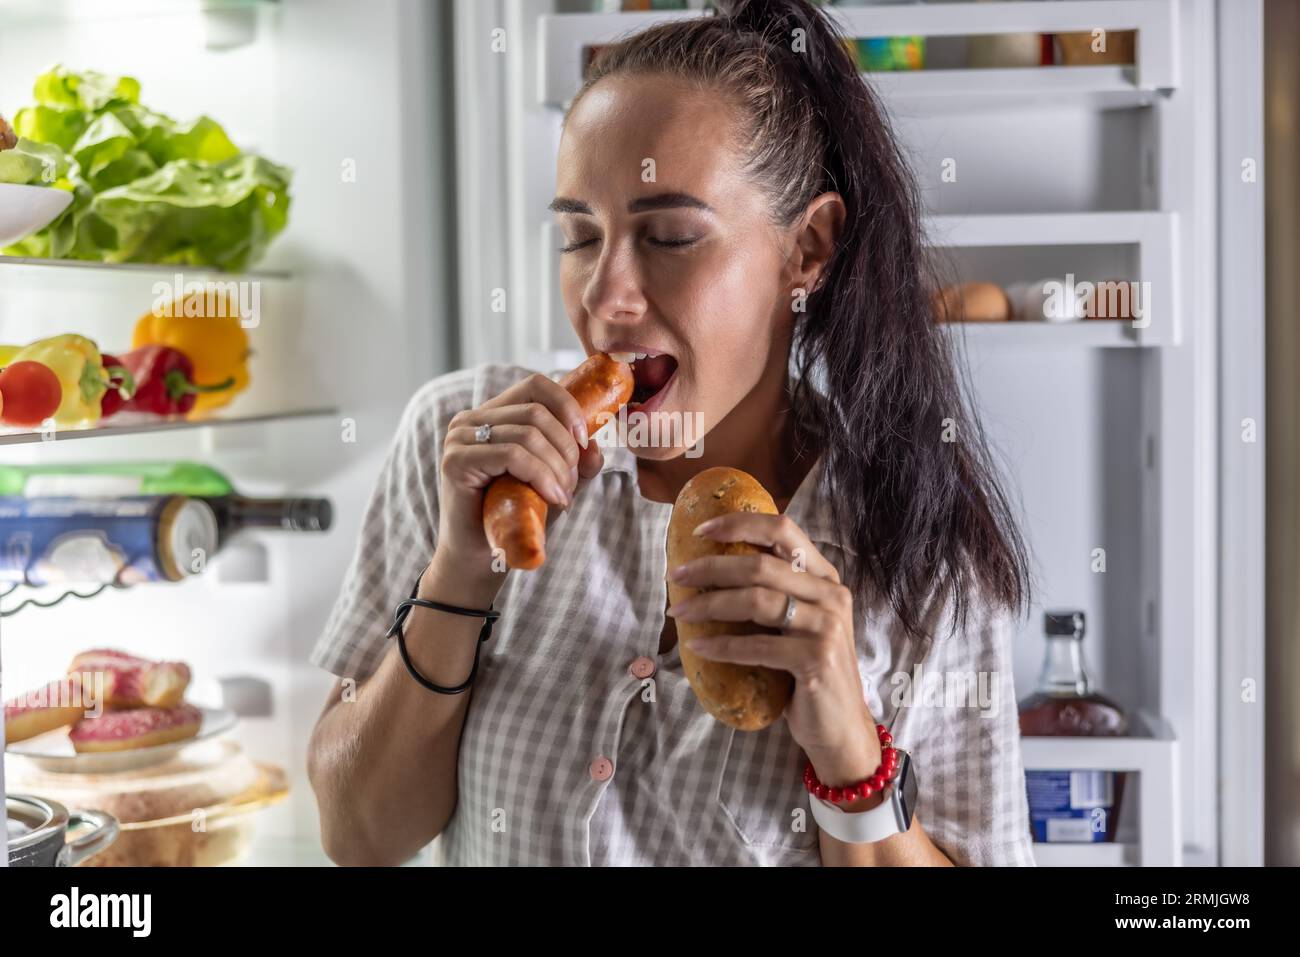 Hungrige Frau im Pyjama isst abends am Kühlschrank Würstchen mit Brot. Stockfoto